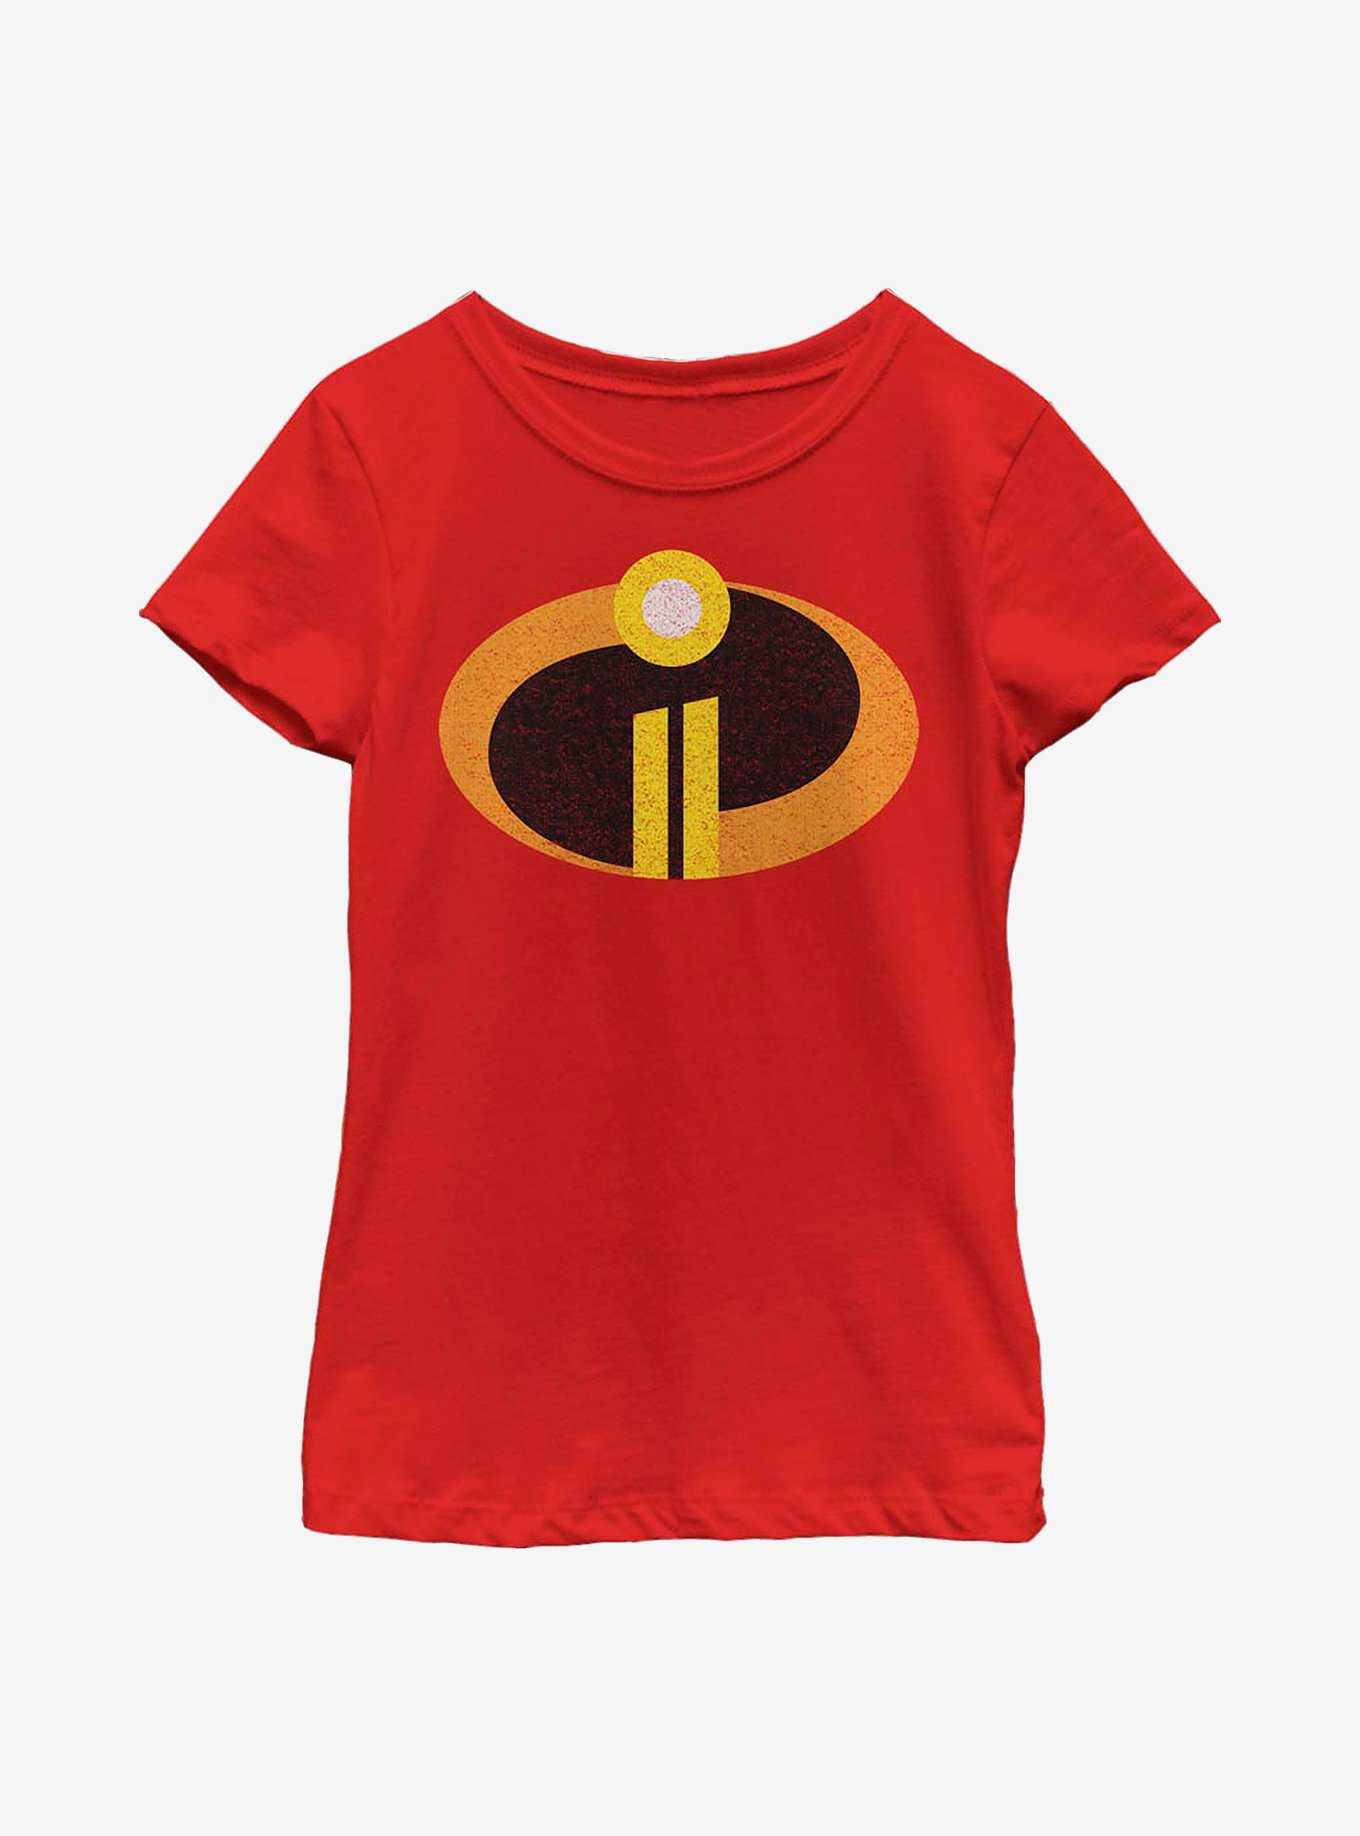 Disney Pixar The Incredibles Lit Match Youth Girls T-Shirt, , hi-res